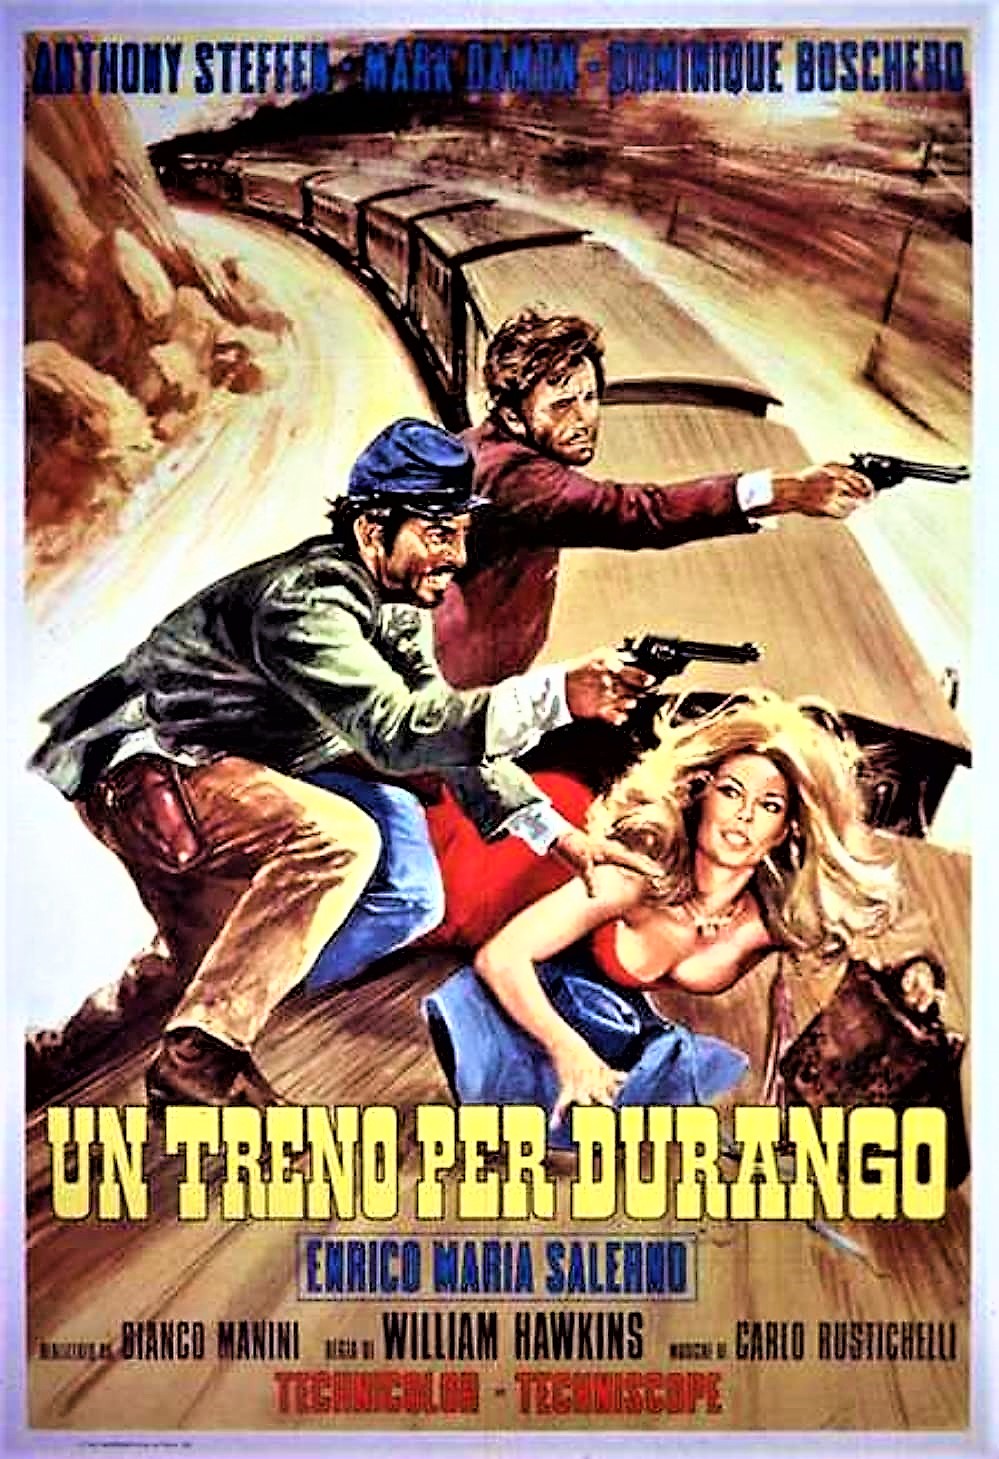 Train for Durango movie poster